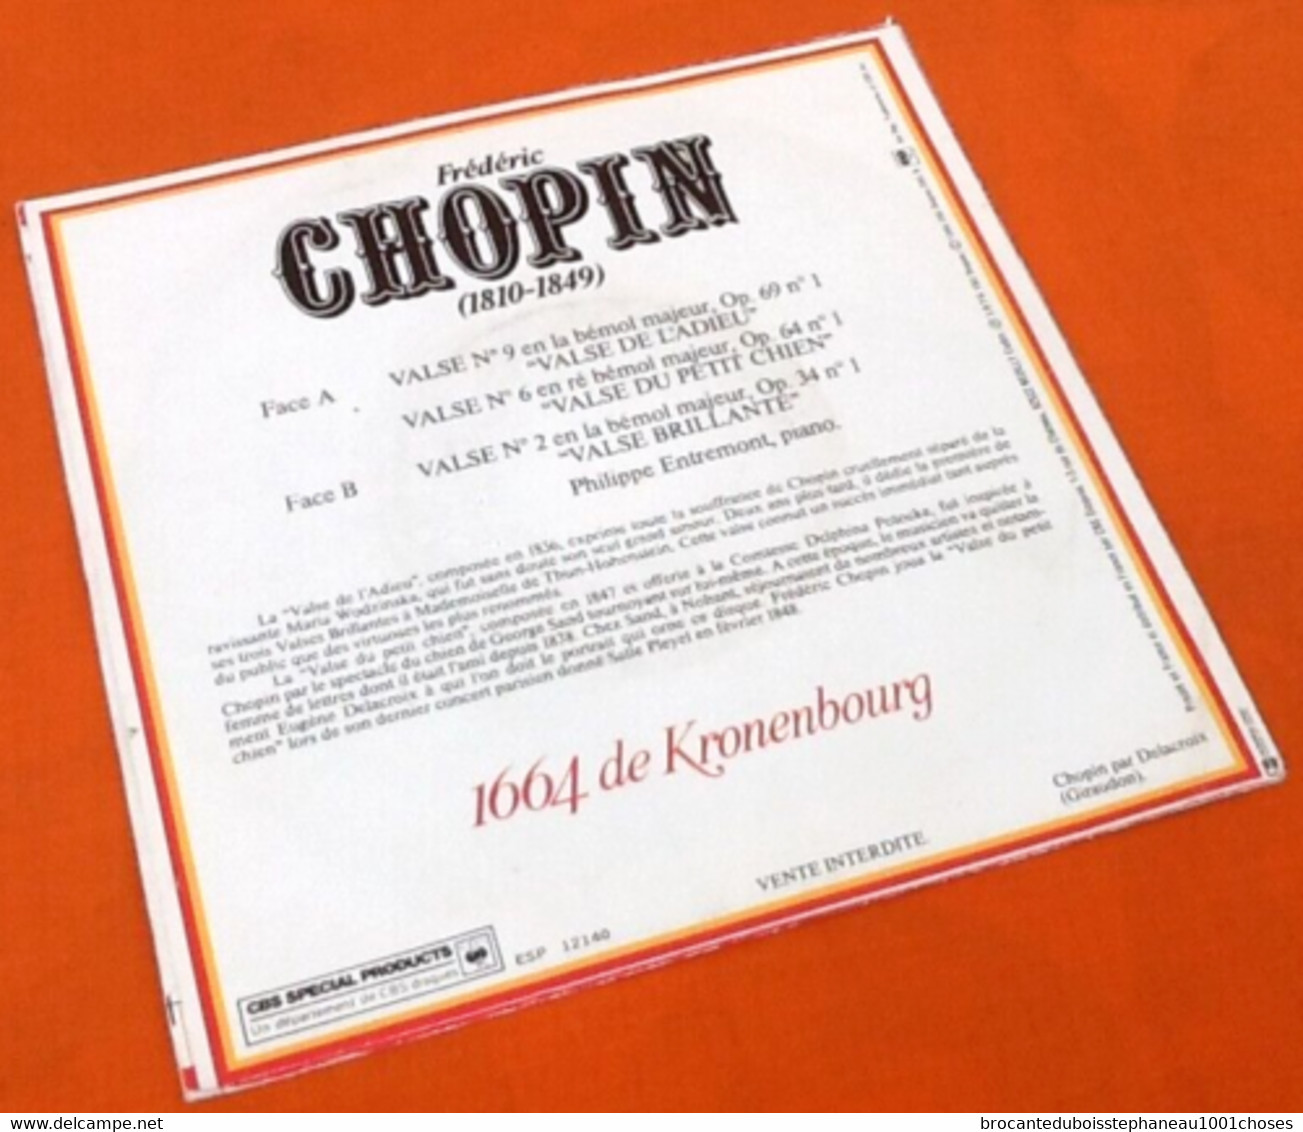 Vinyle 45 Tours  Frédéric  Chopin / Philippe Entremont  Valses  (1976) - Classical